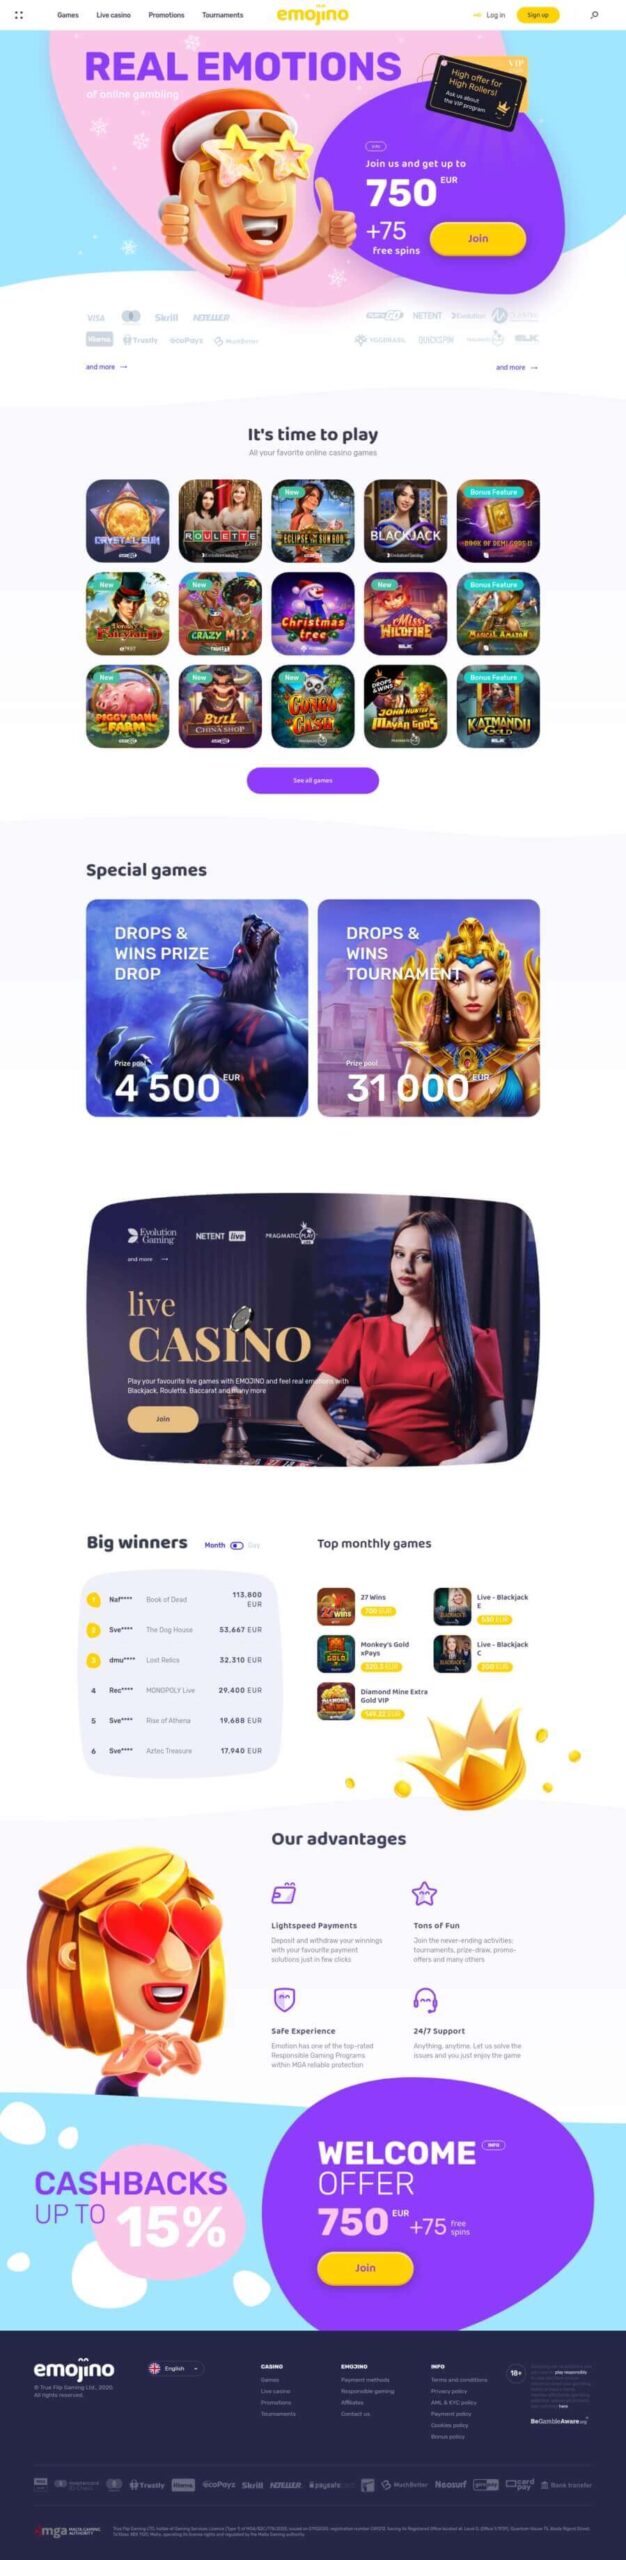 EMOJINO Online Casino Real Emotions of Online Gambling